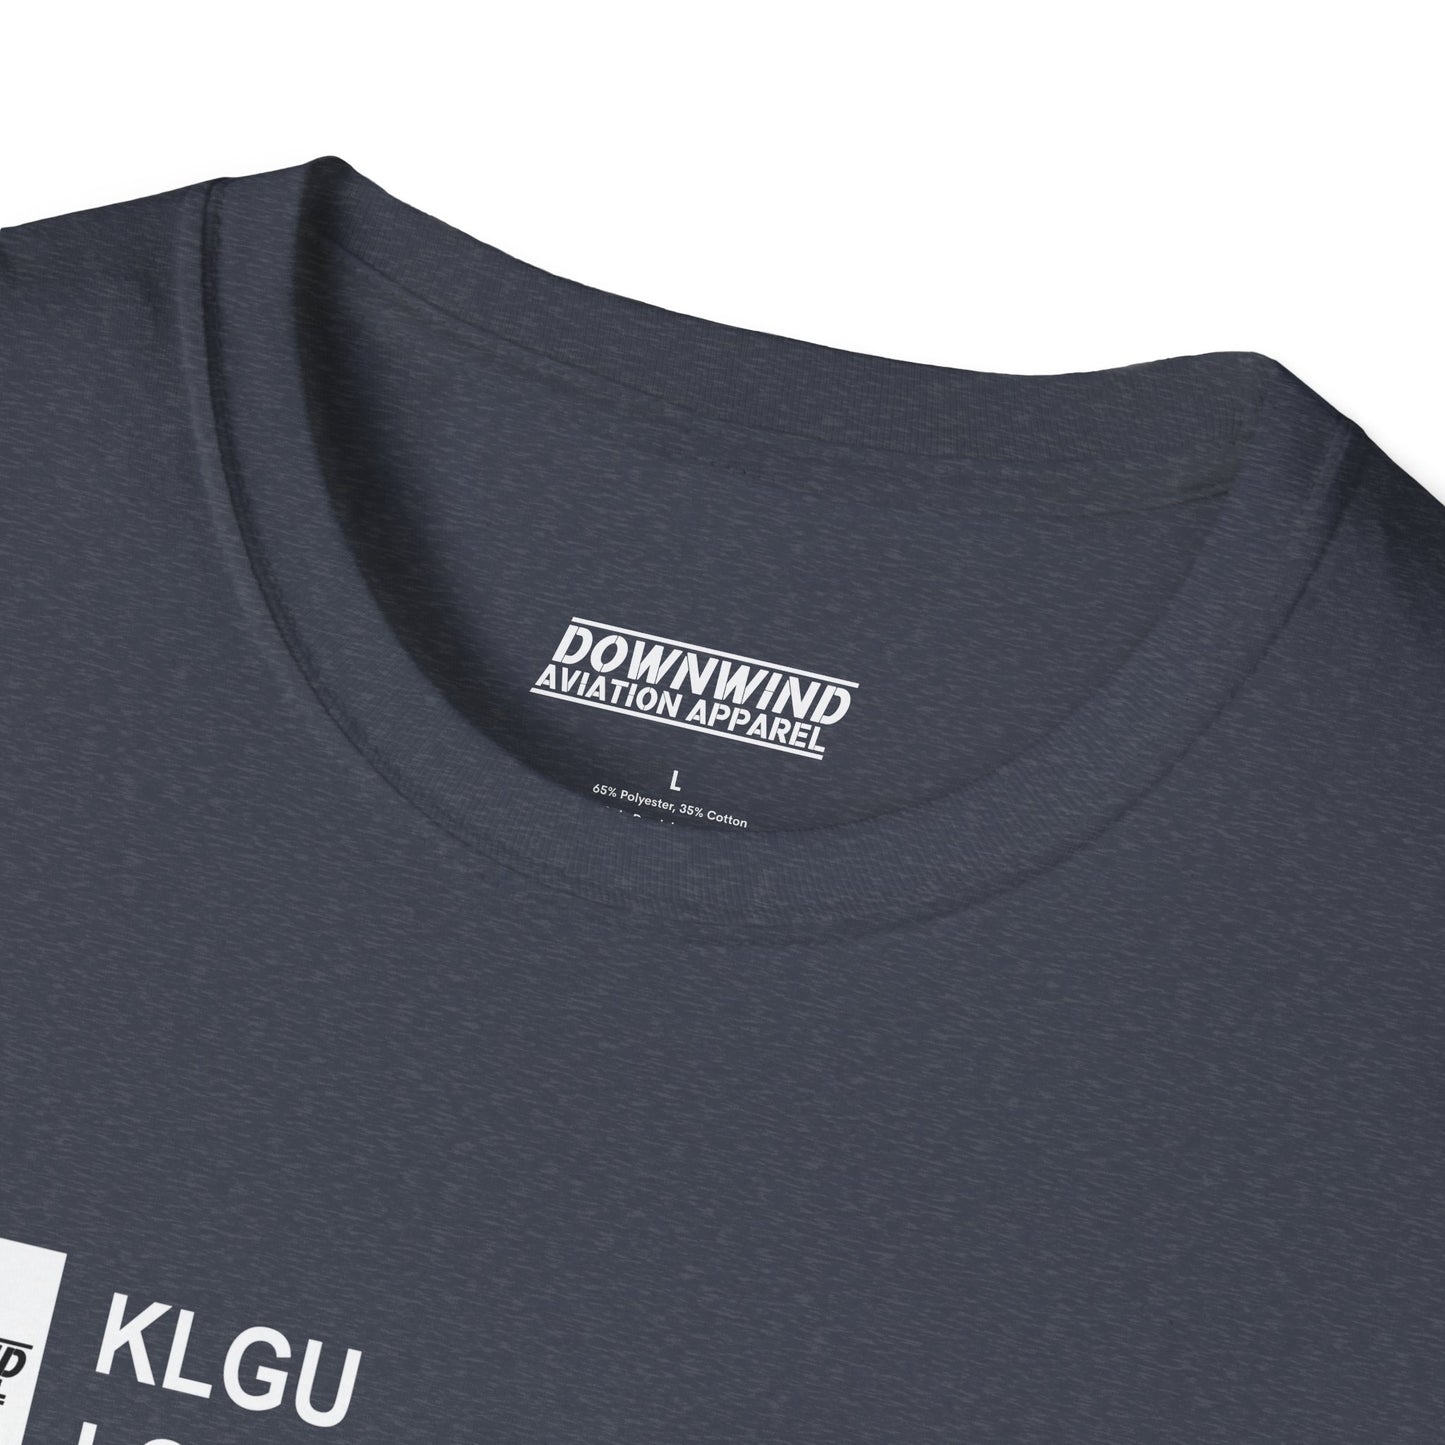 KLGU / Logan-Cache Airport T-Shirt